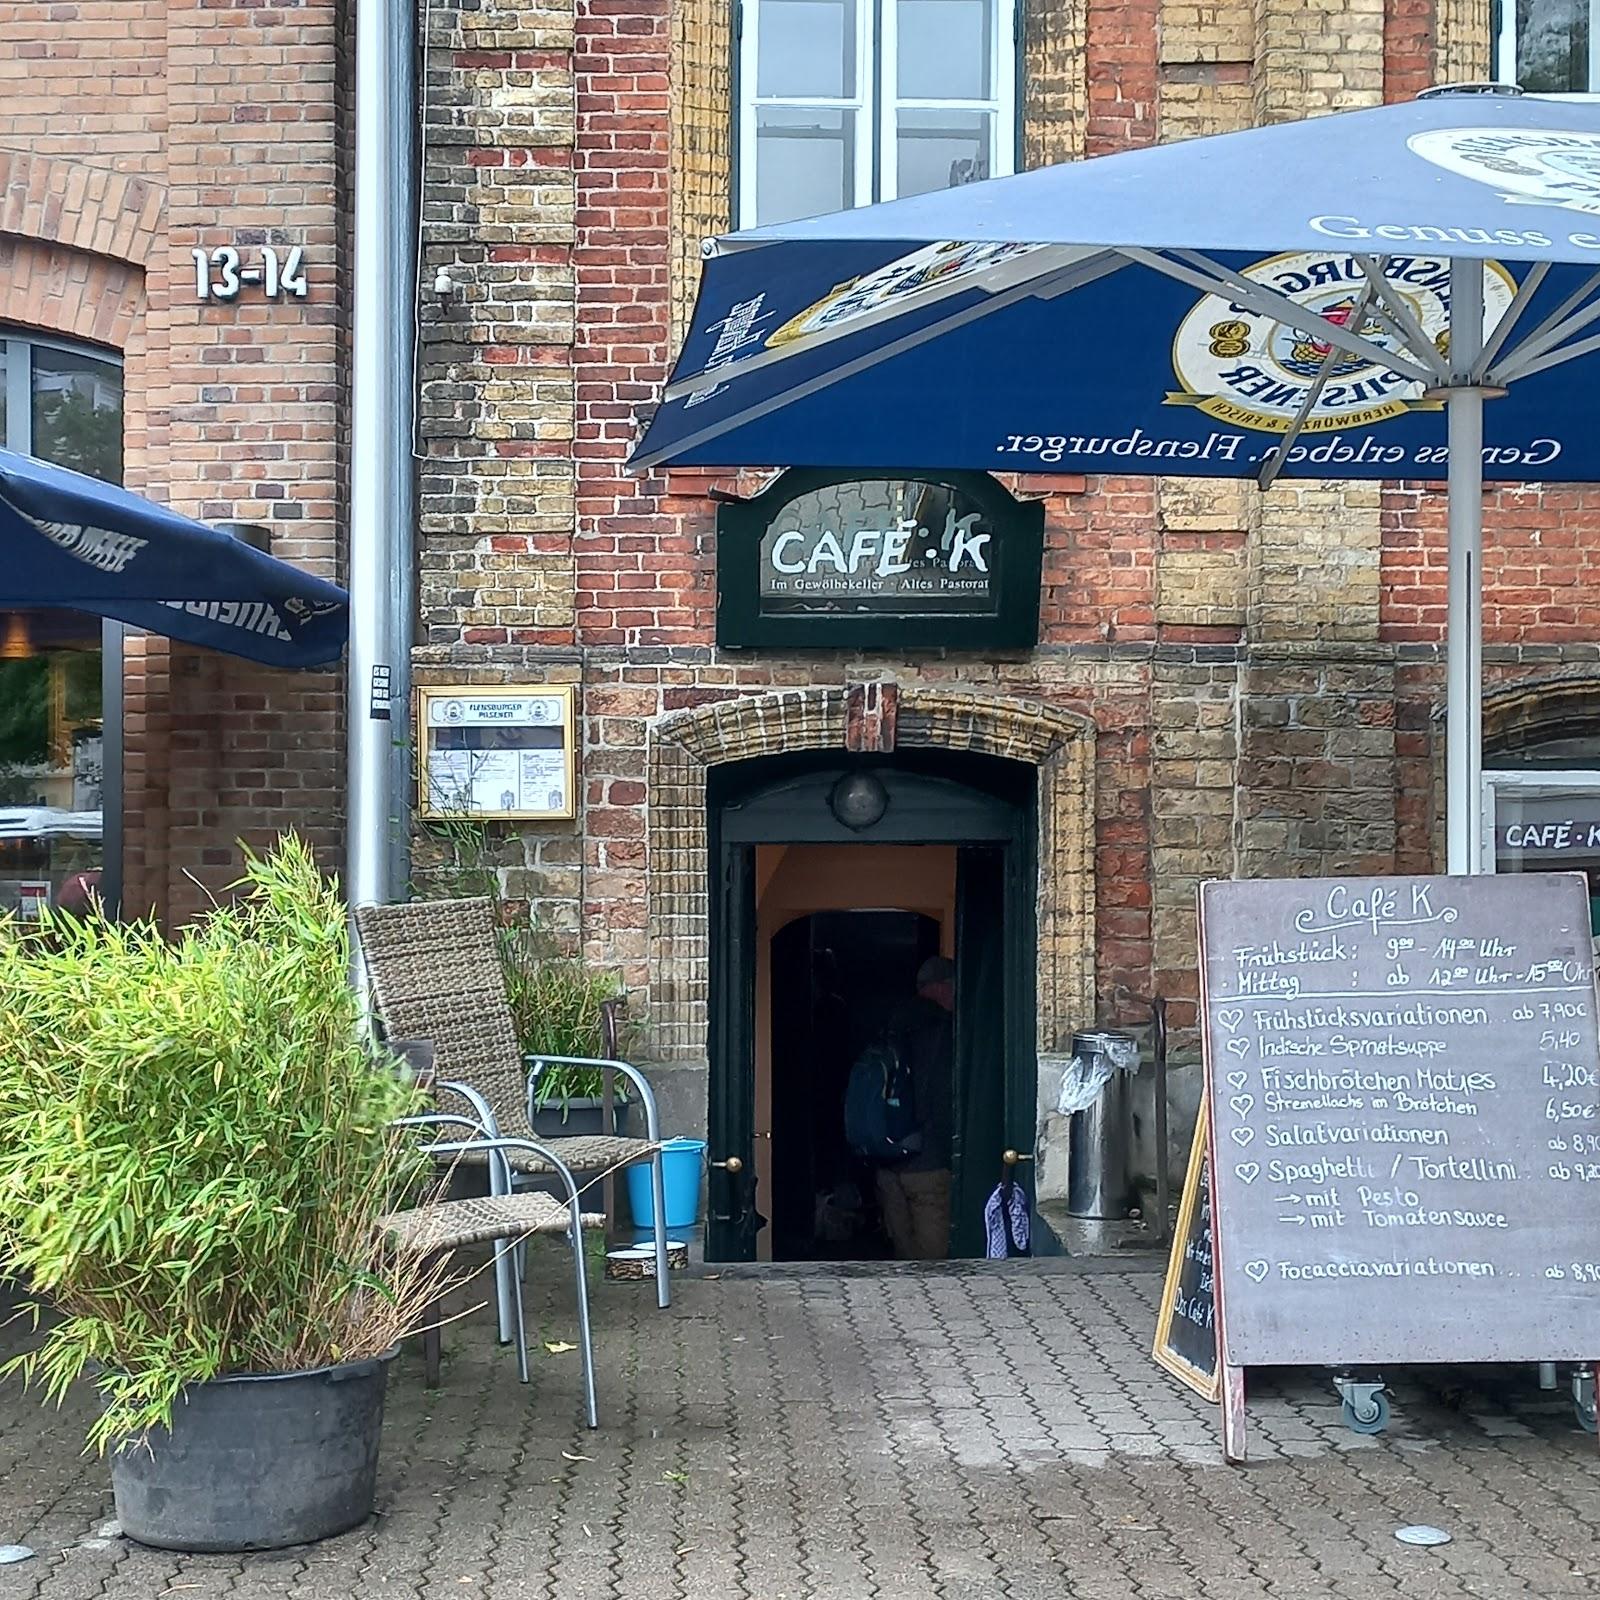 Restaurant "Café K" in Flensburg